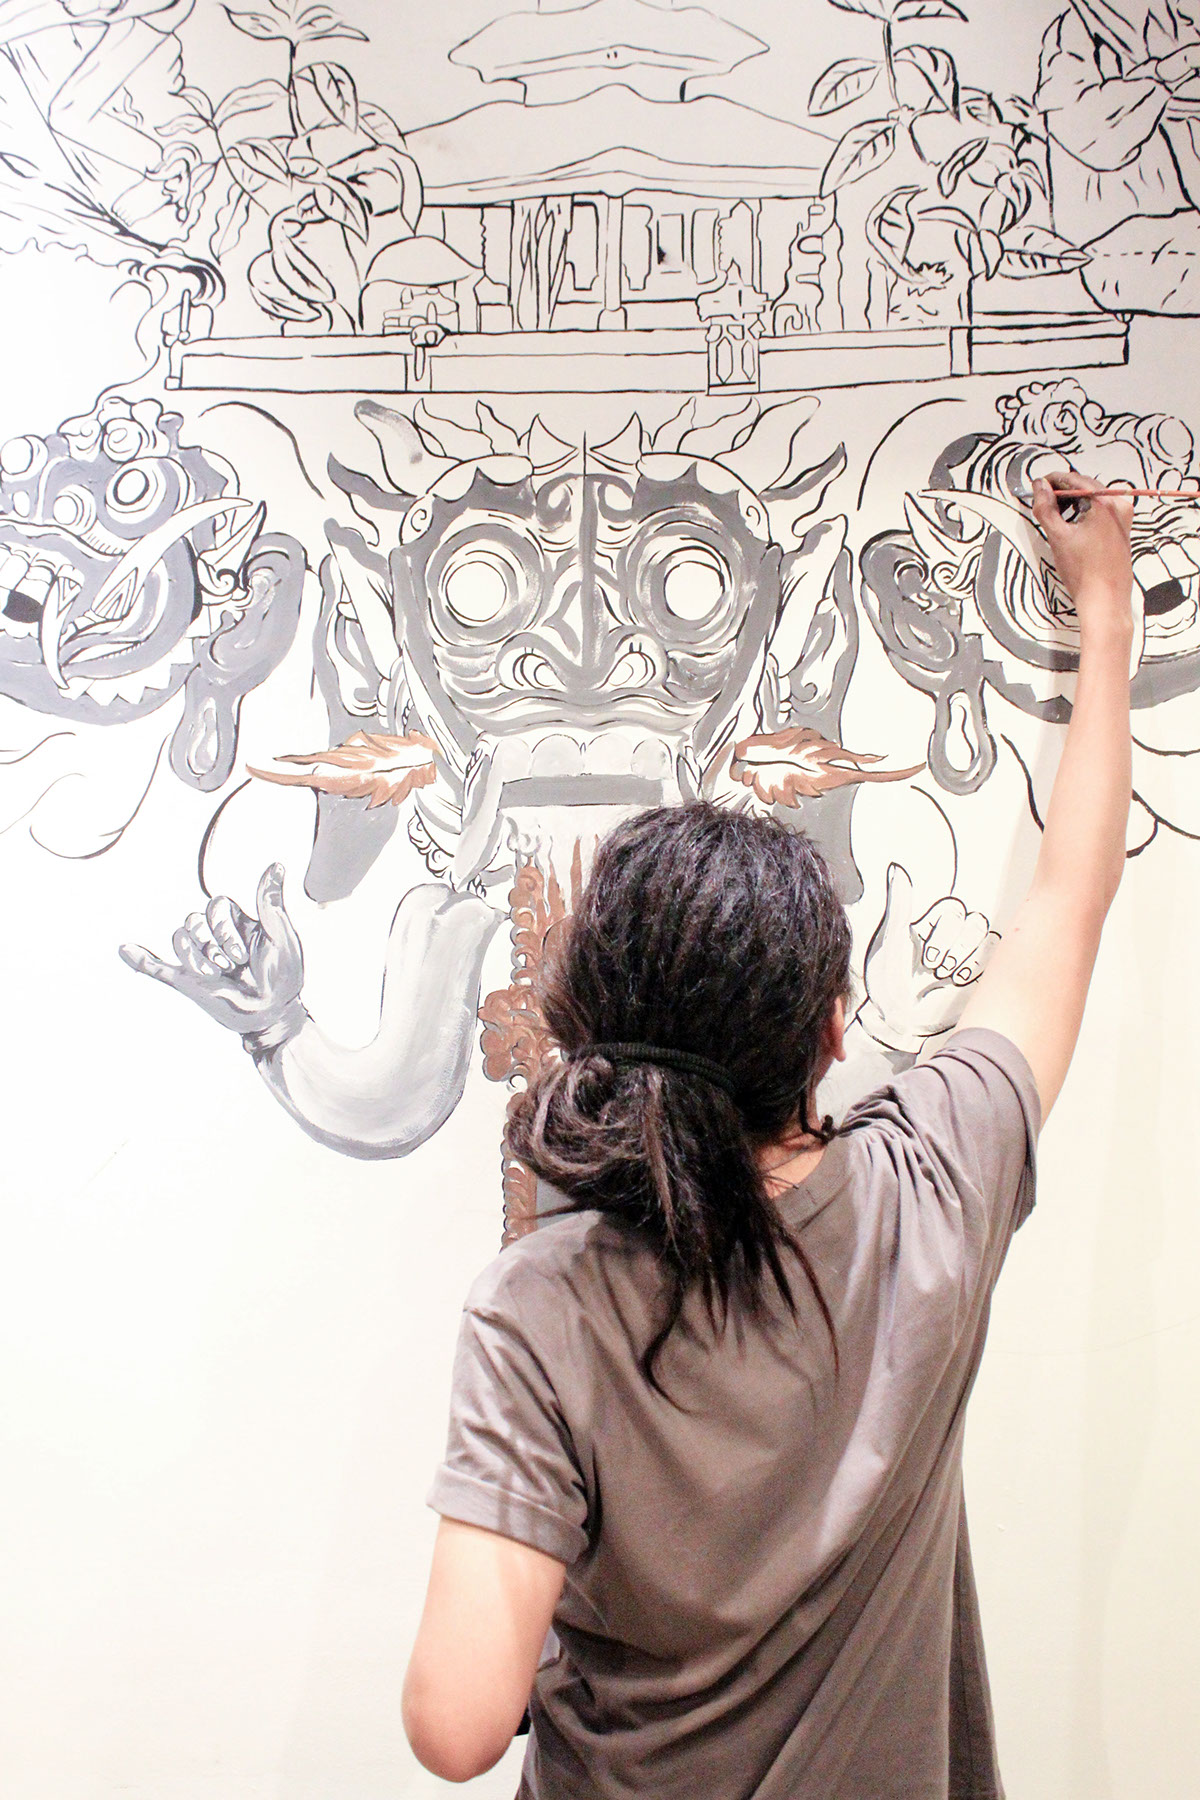 coffeeshop Coffee indonesia culture Mural walls